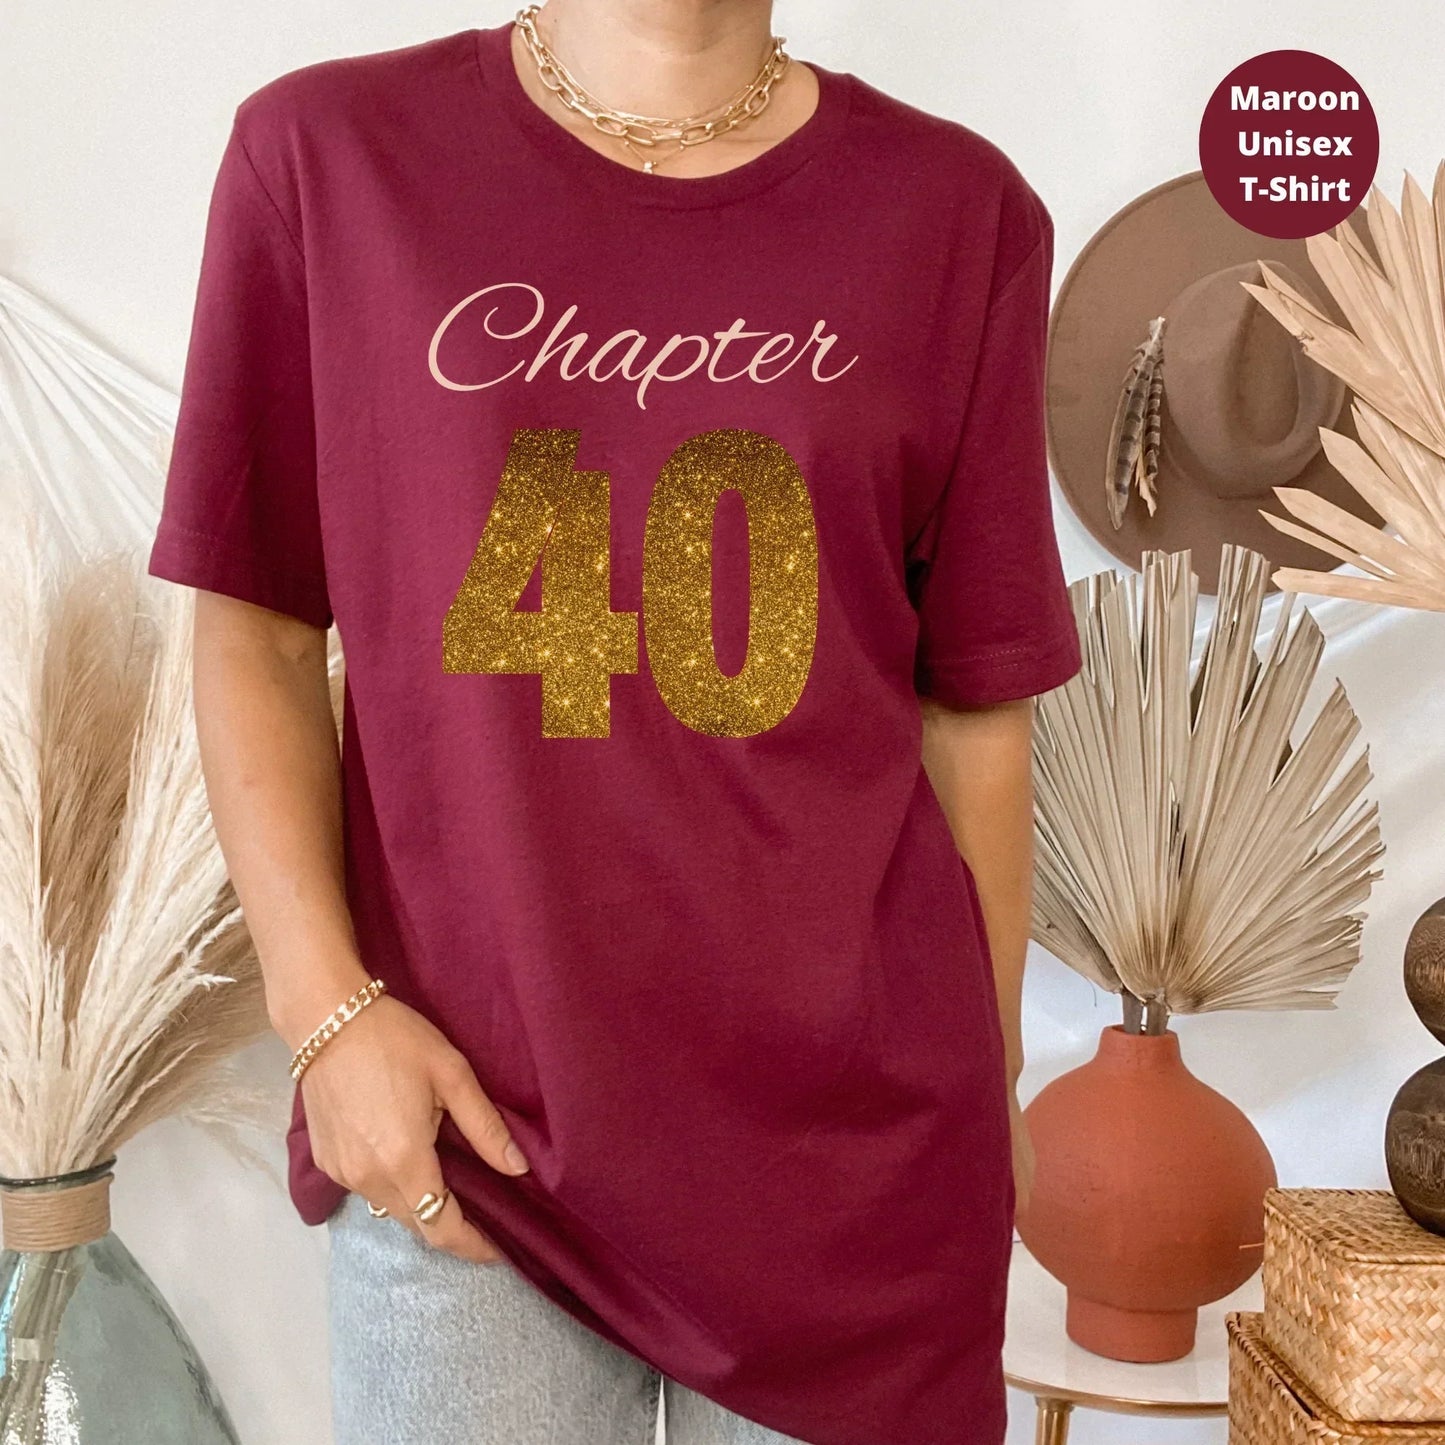 40th Birthday Shirt, Birthday Group Shirt, Chapter Forty, Birthday Crew, 40th Birthday Squad, 40th Birthday Tee HMDesignStudioUS